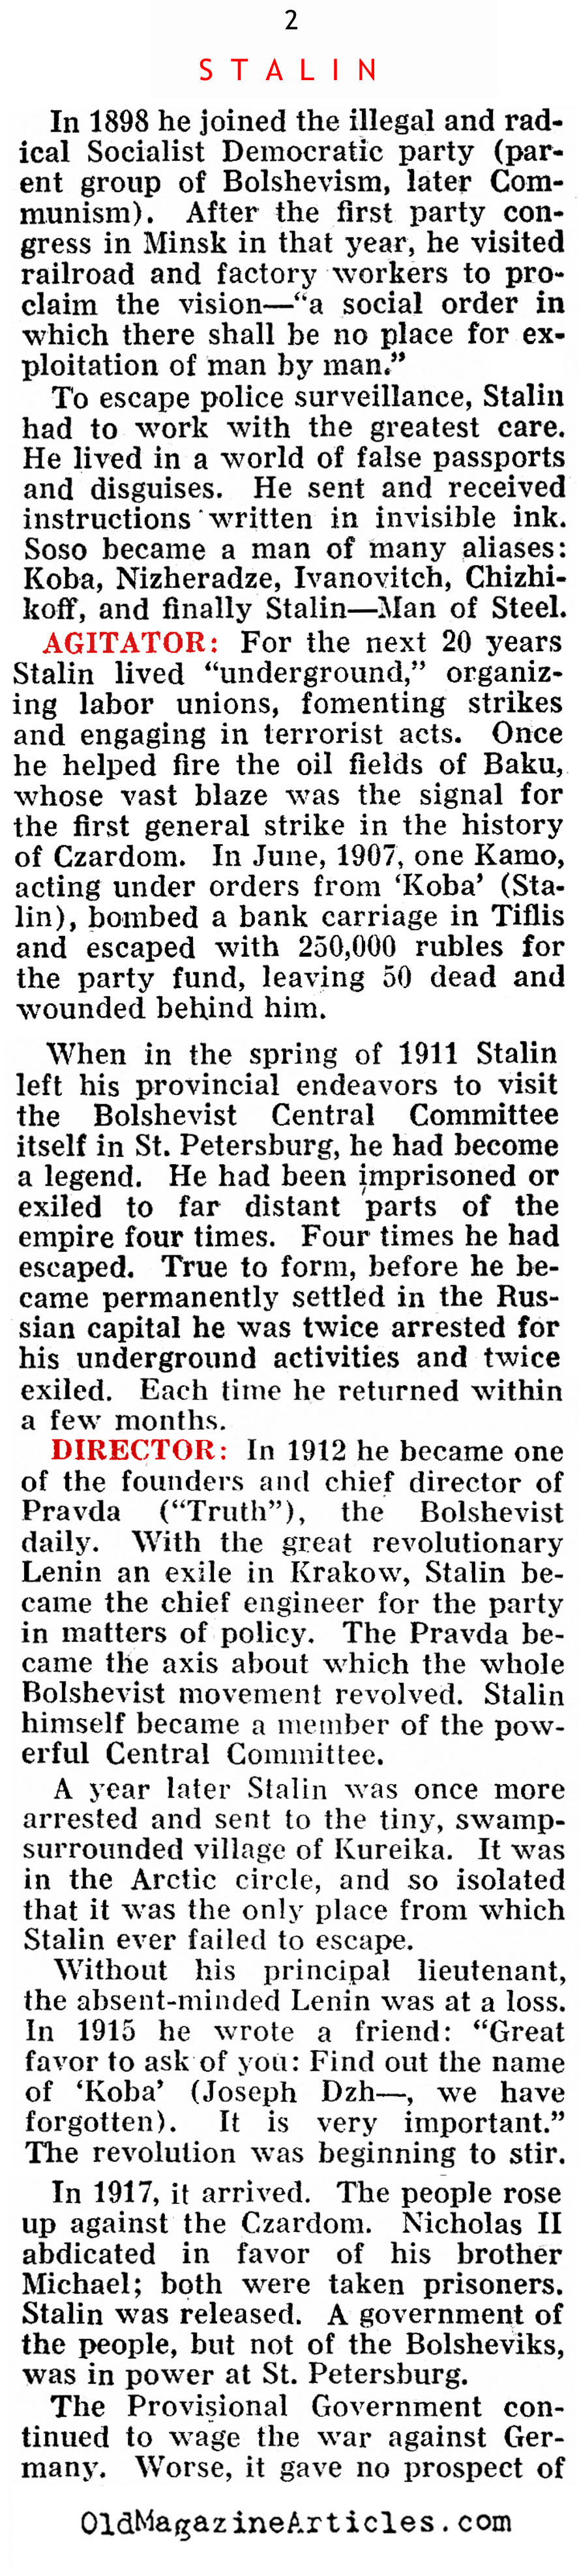 Meet Joseph Stalin (Pathfinder Magazine, 1937)